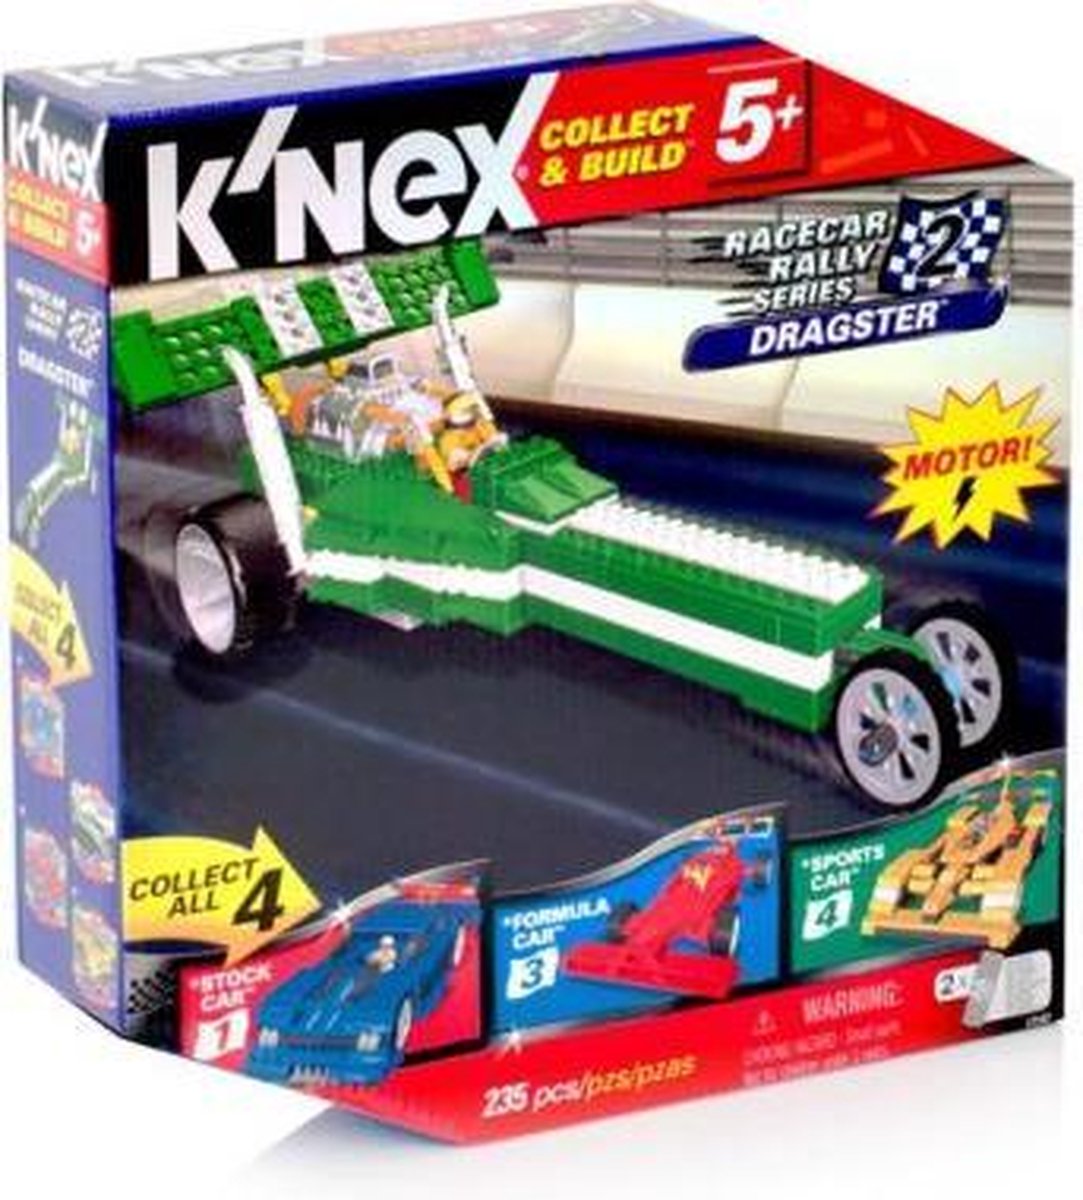 K'NEX - Collect & Build - Nr.2 - Racecar rally series - Dragster